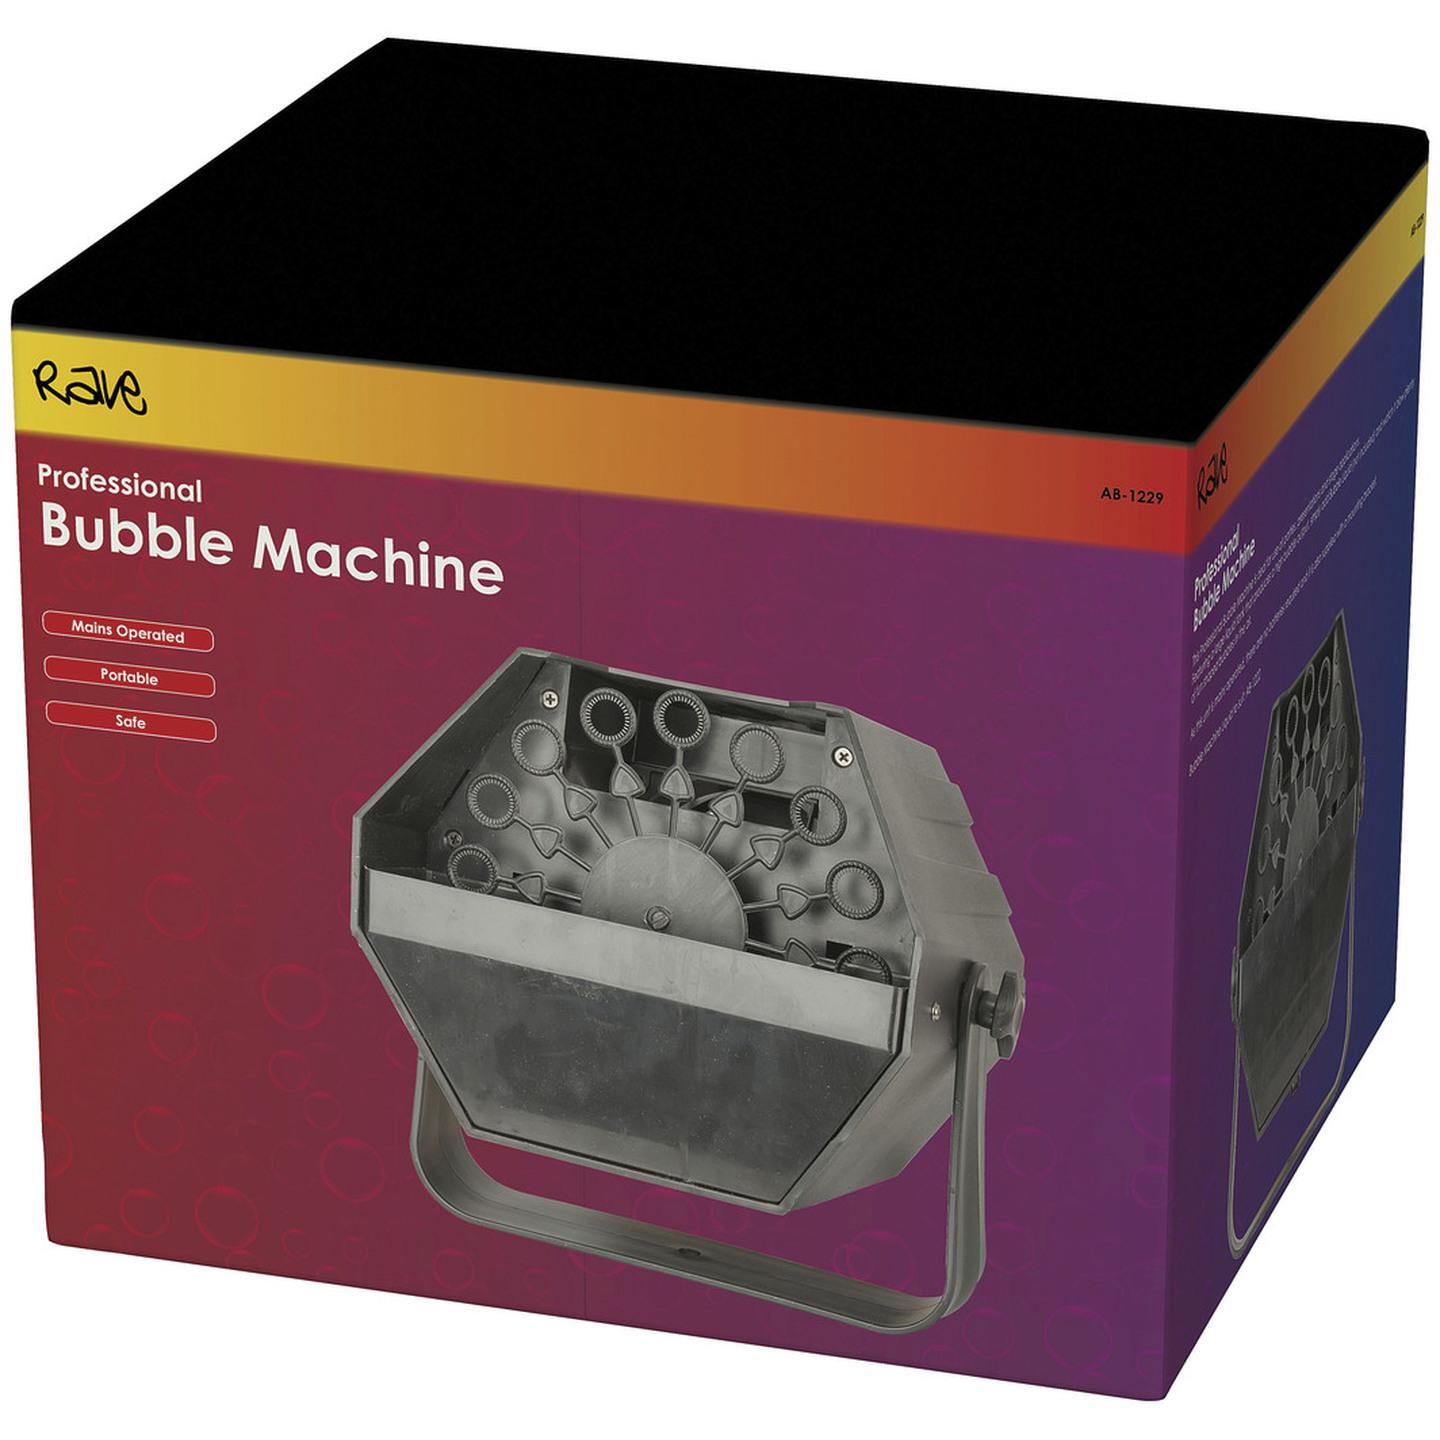 Professional Mains Operated Bubble Machine